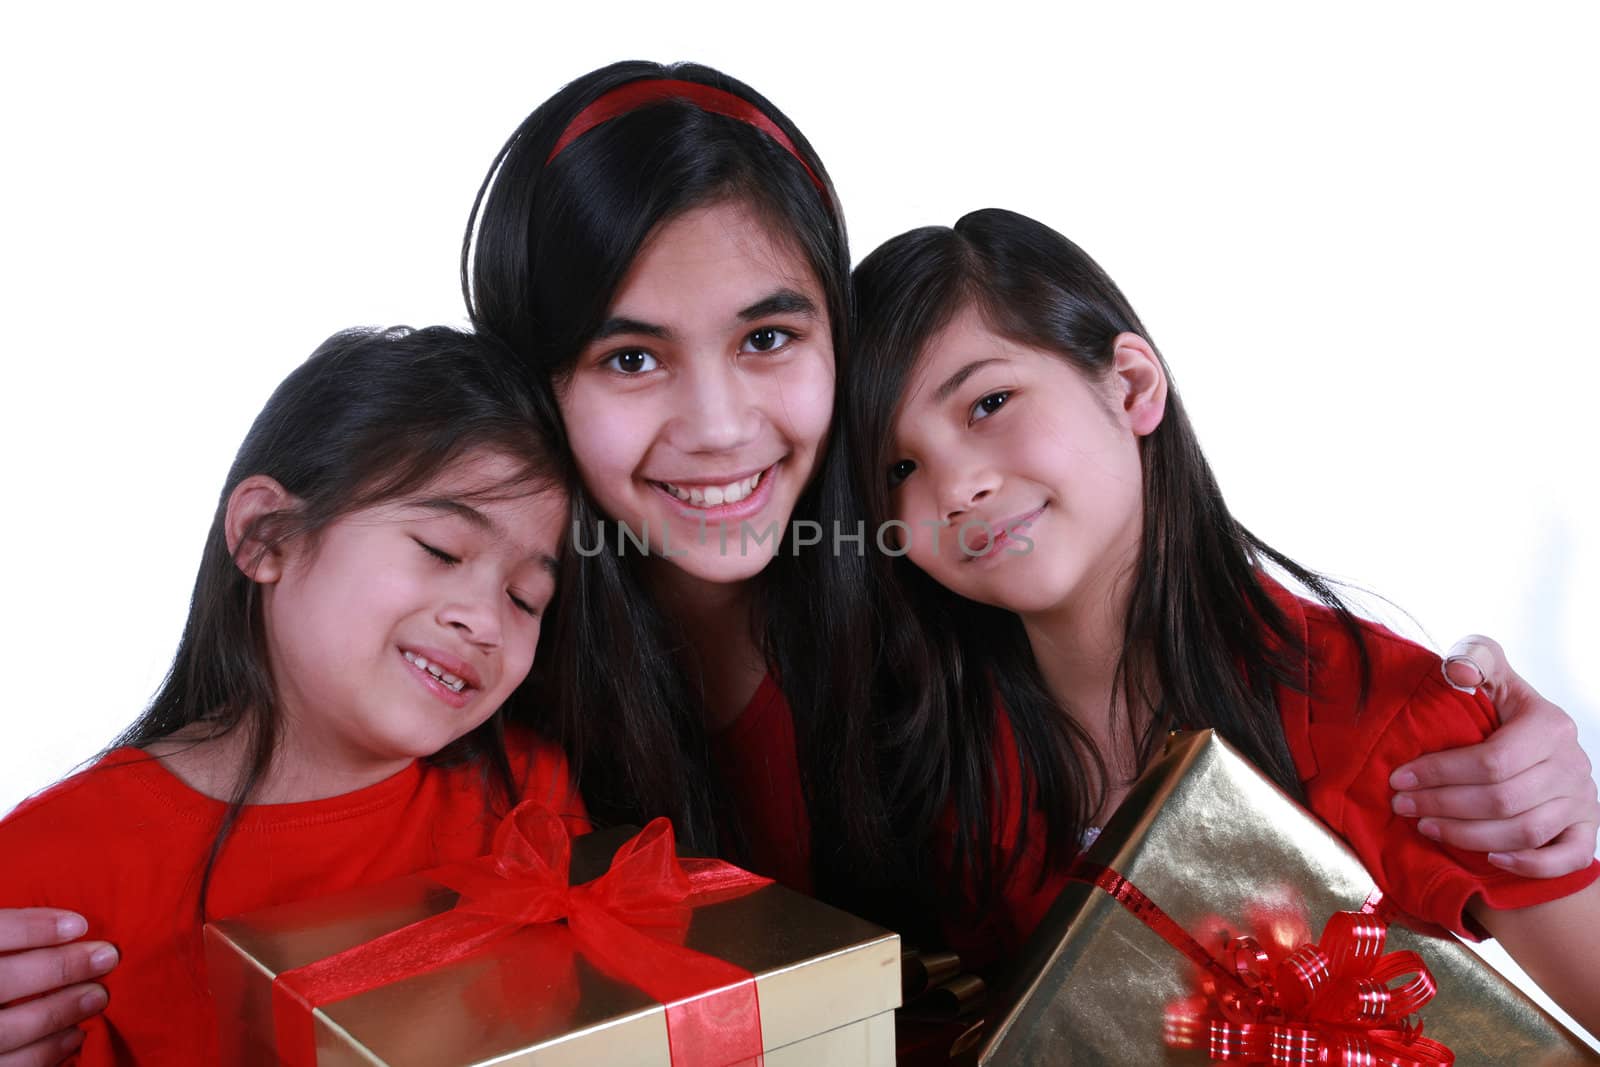 Three sisters holding presents by jarenwicklund